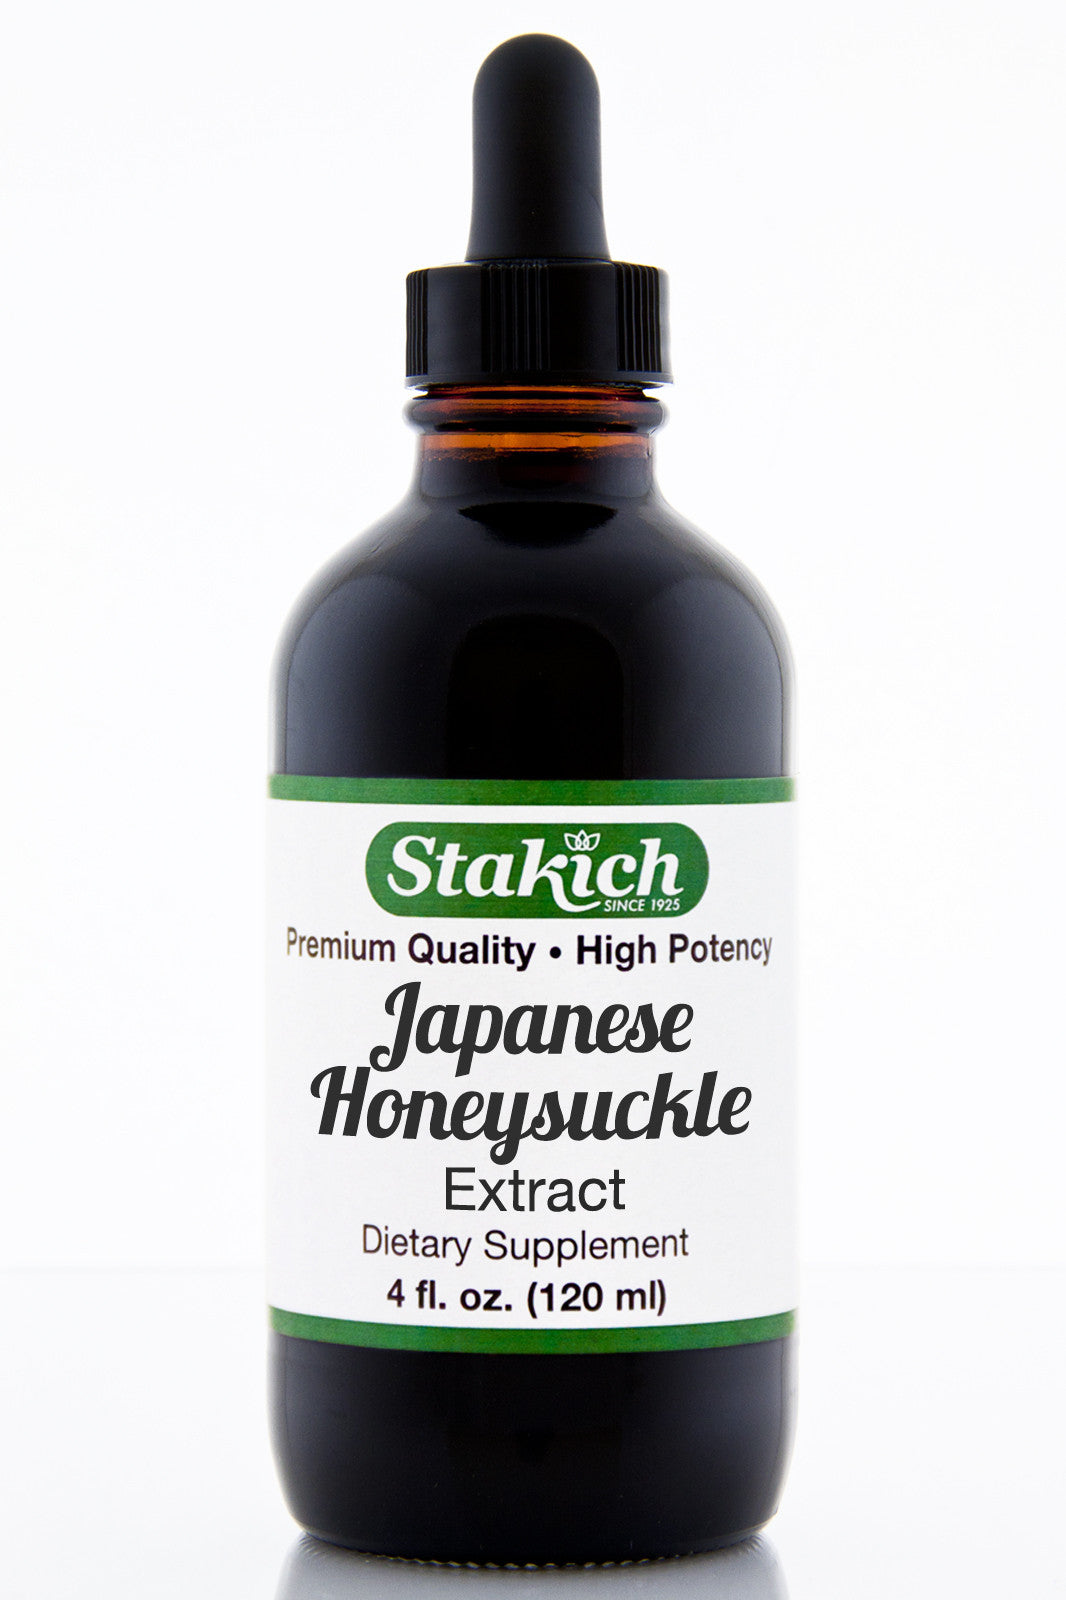 Japanese Honeysuckle Extract